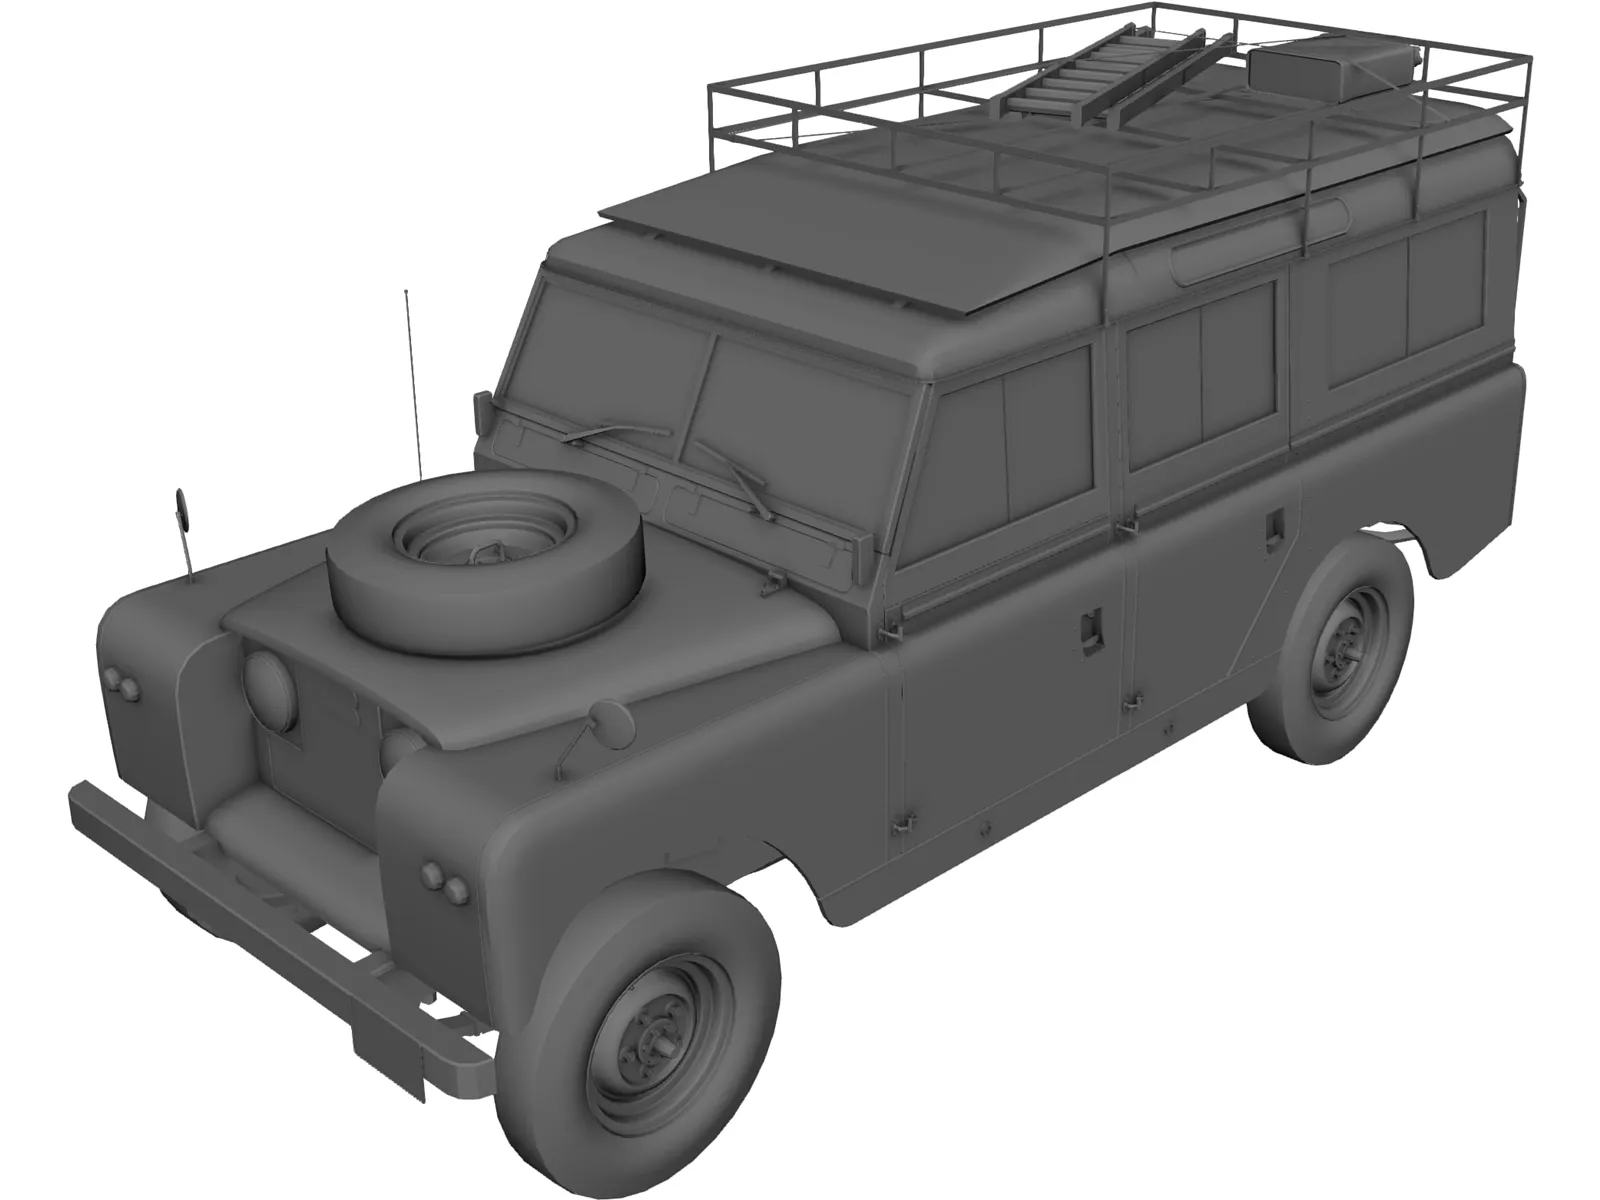 Land Rover Series IIa Station Wagon (1967) 3D Model